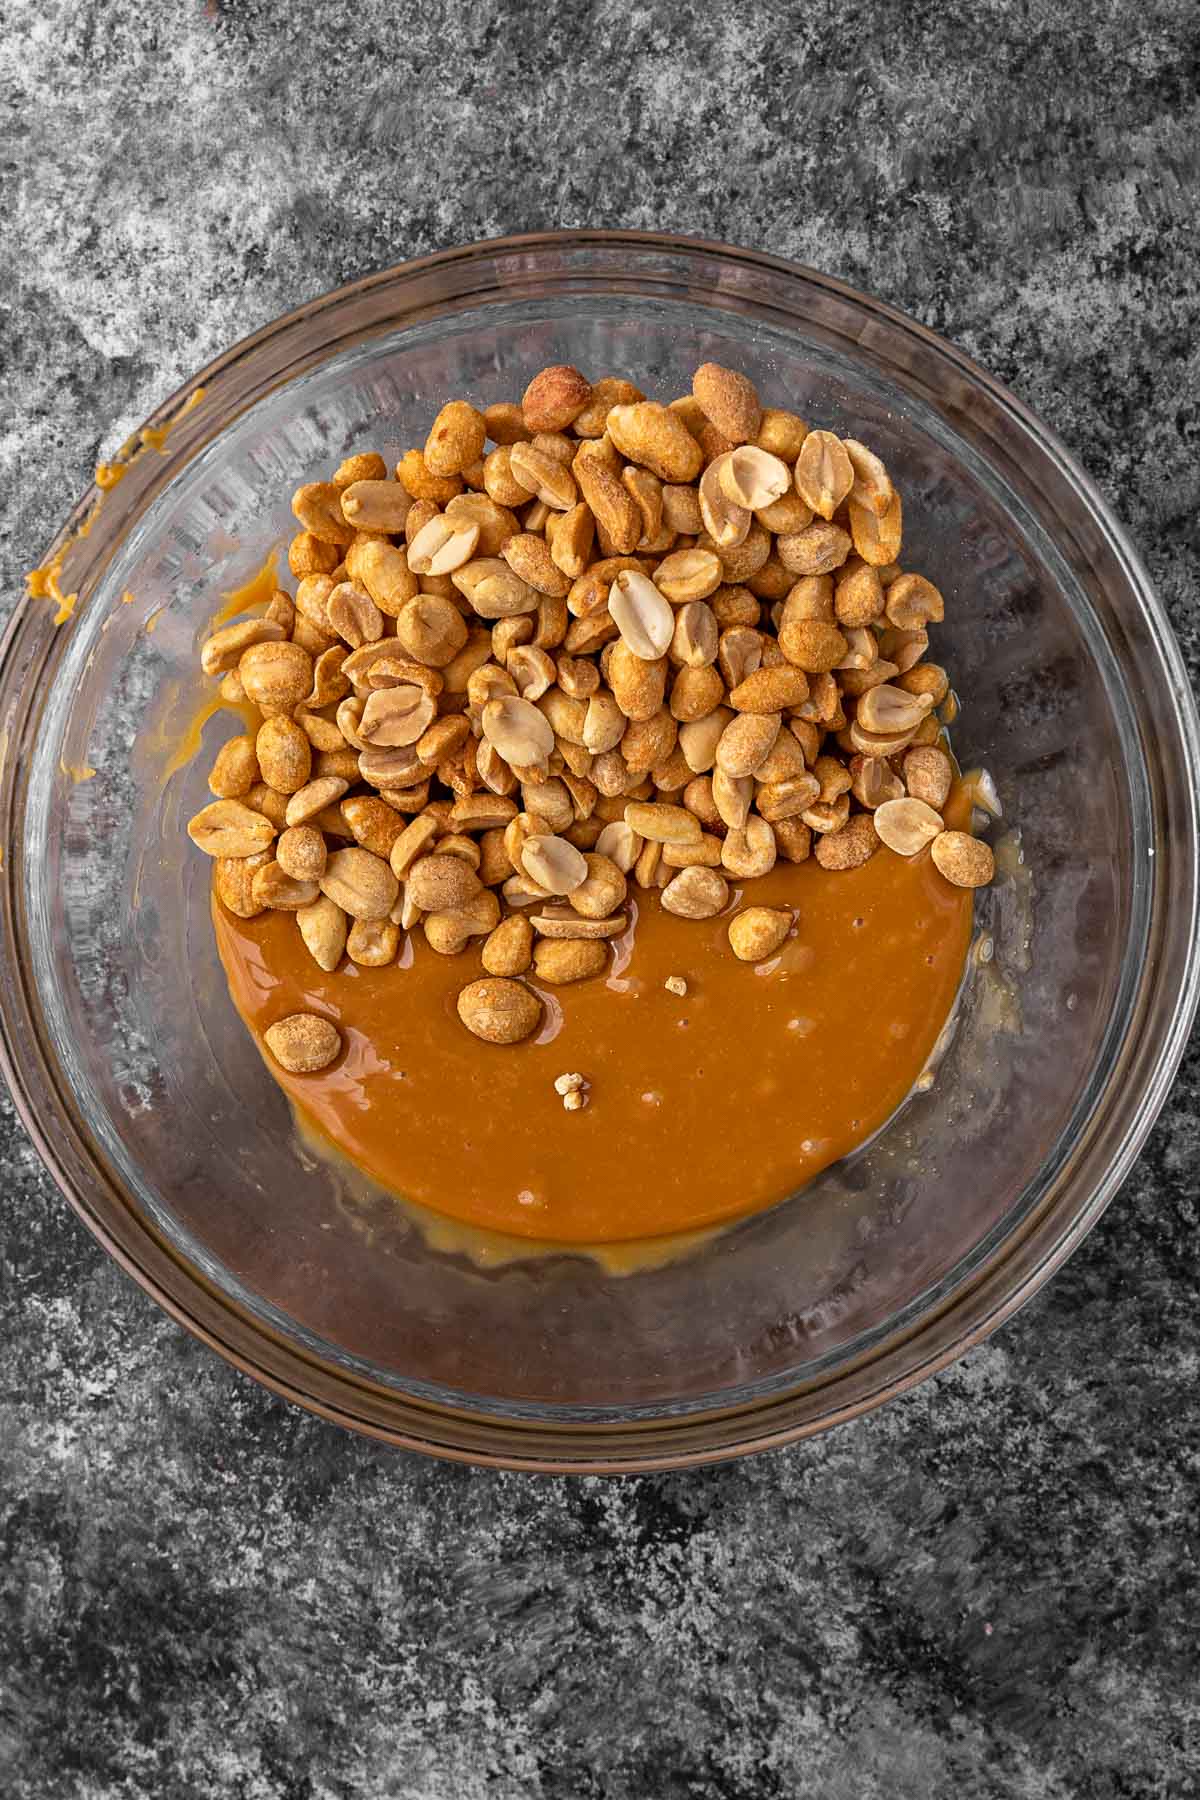 Candy Bar Fudge Caramel and Peanuts in a Bowl